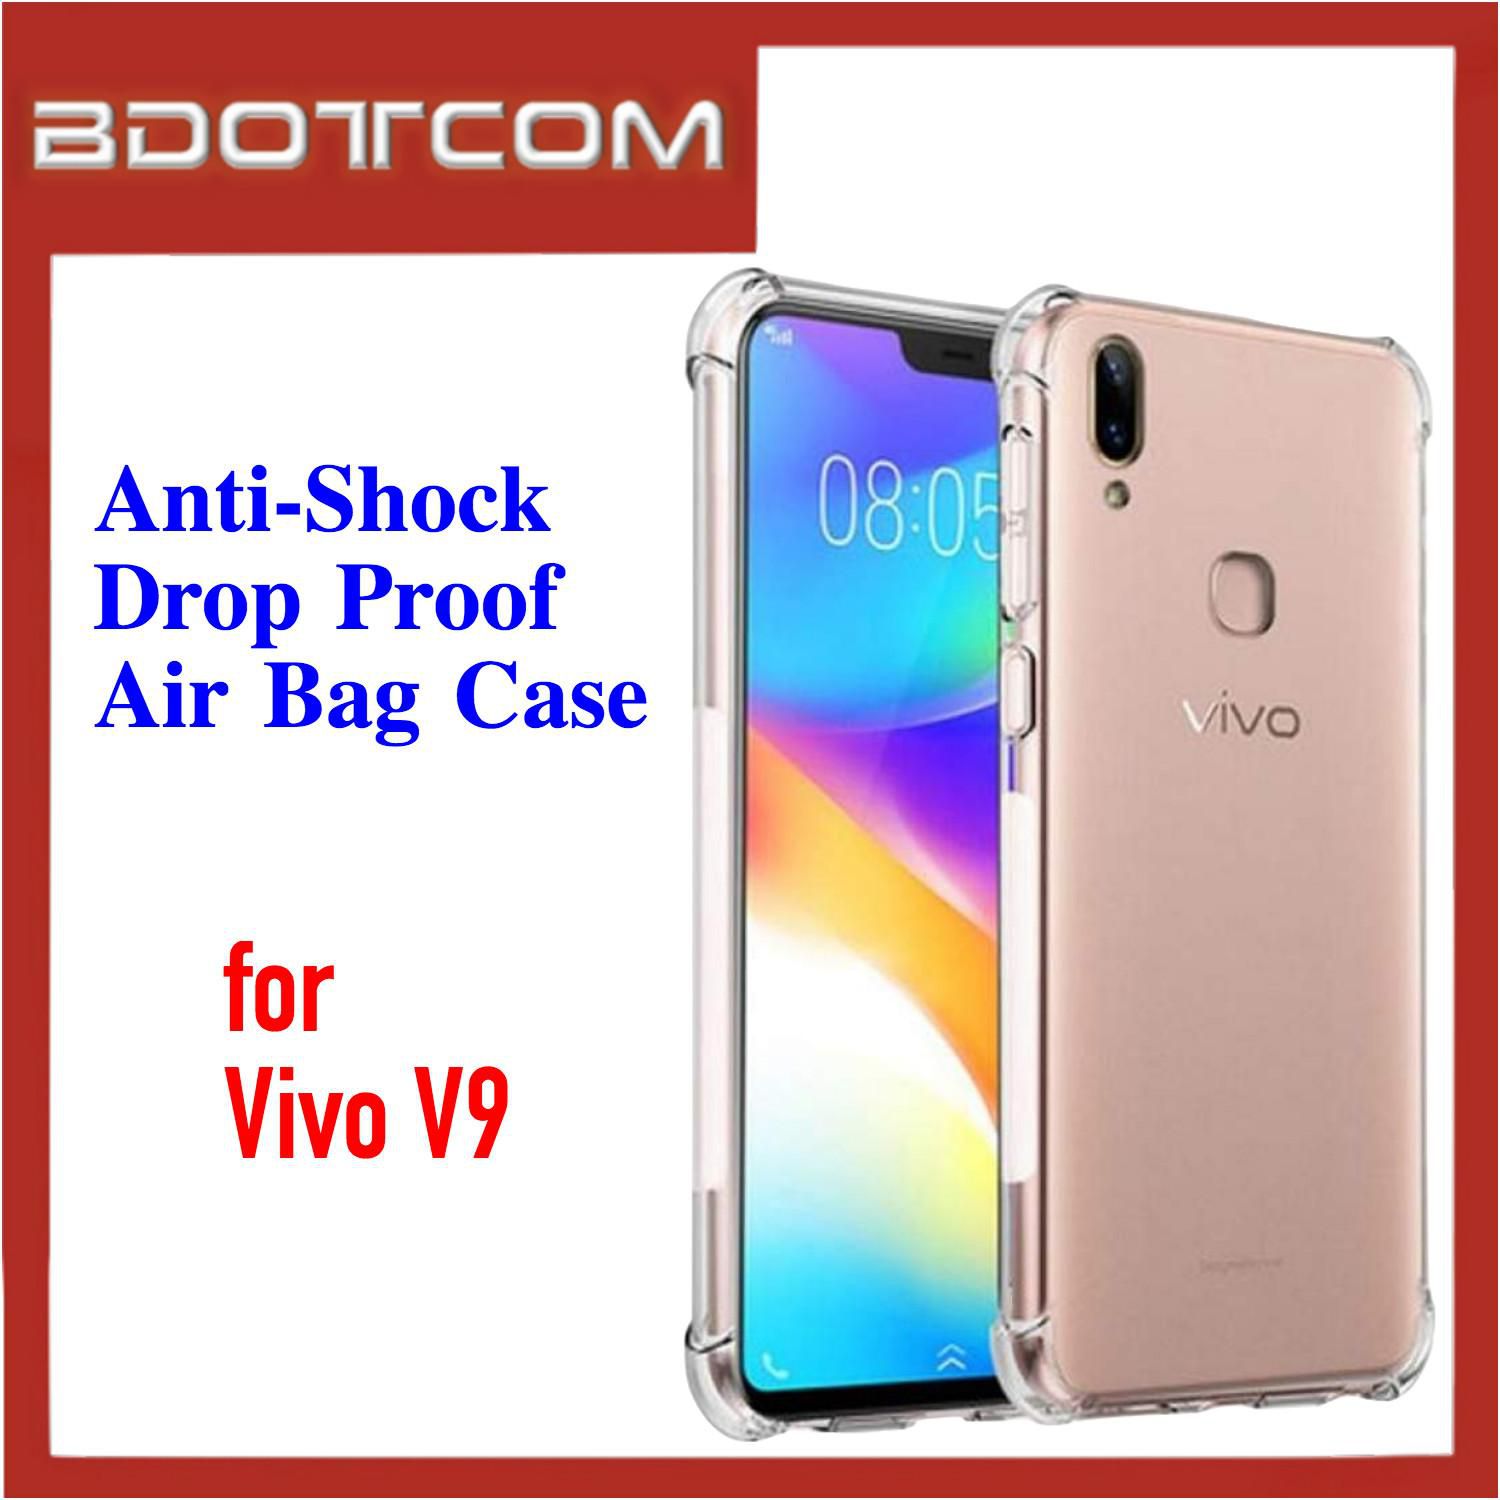 Bdotcom Anti-Shock Drop Proof Air Bag Case for Vivo V9 (Crystal Clear )